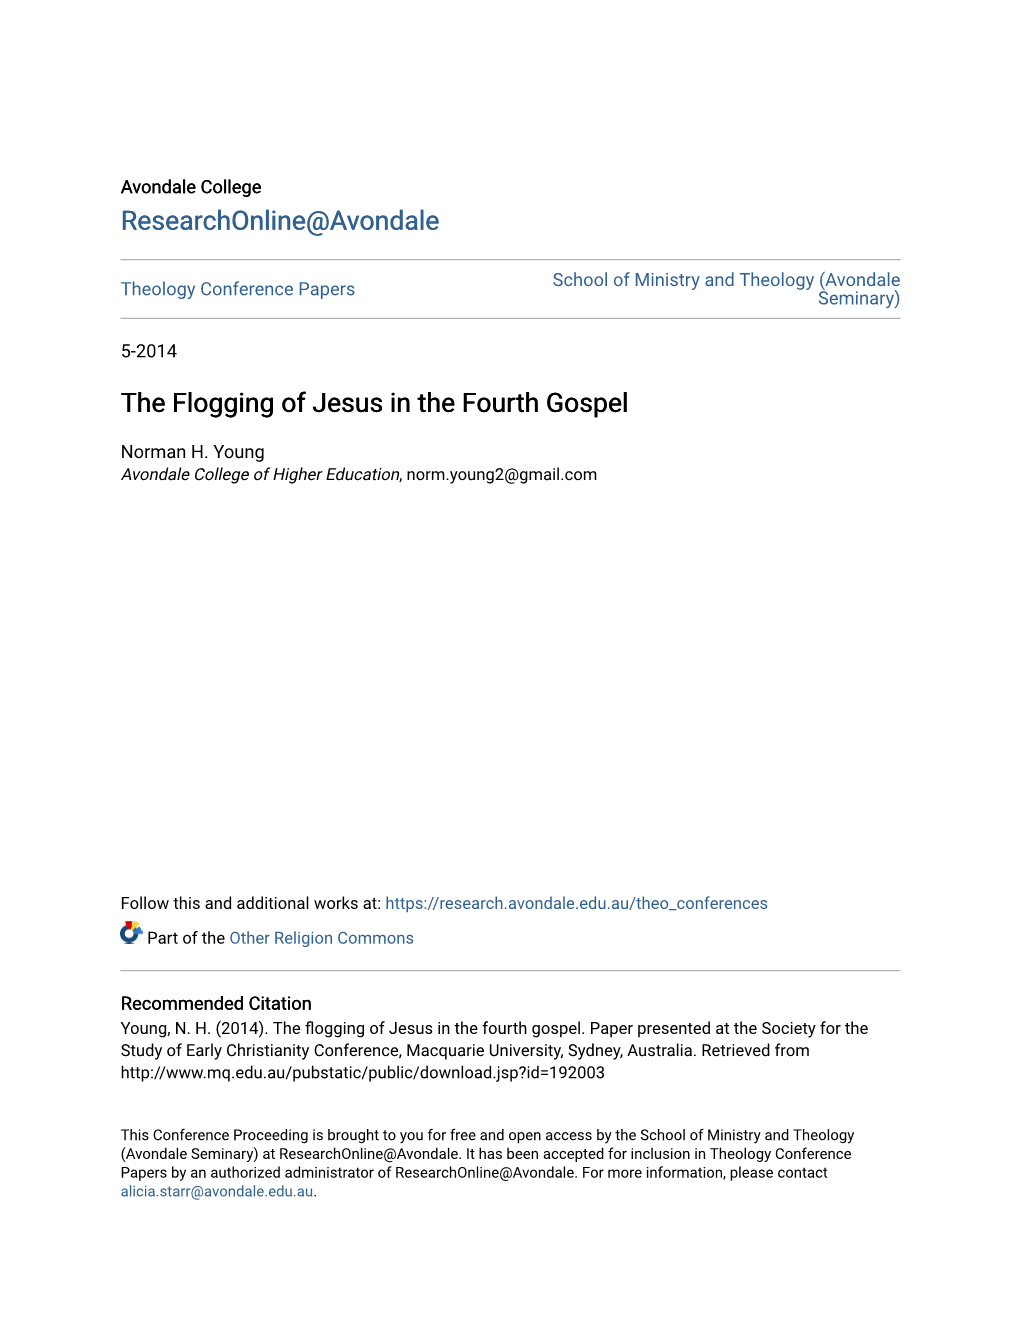 The Flogging of Jesus in the Fourth Gospel